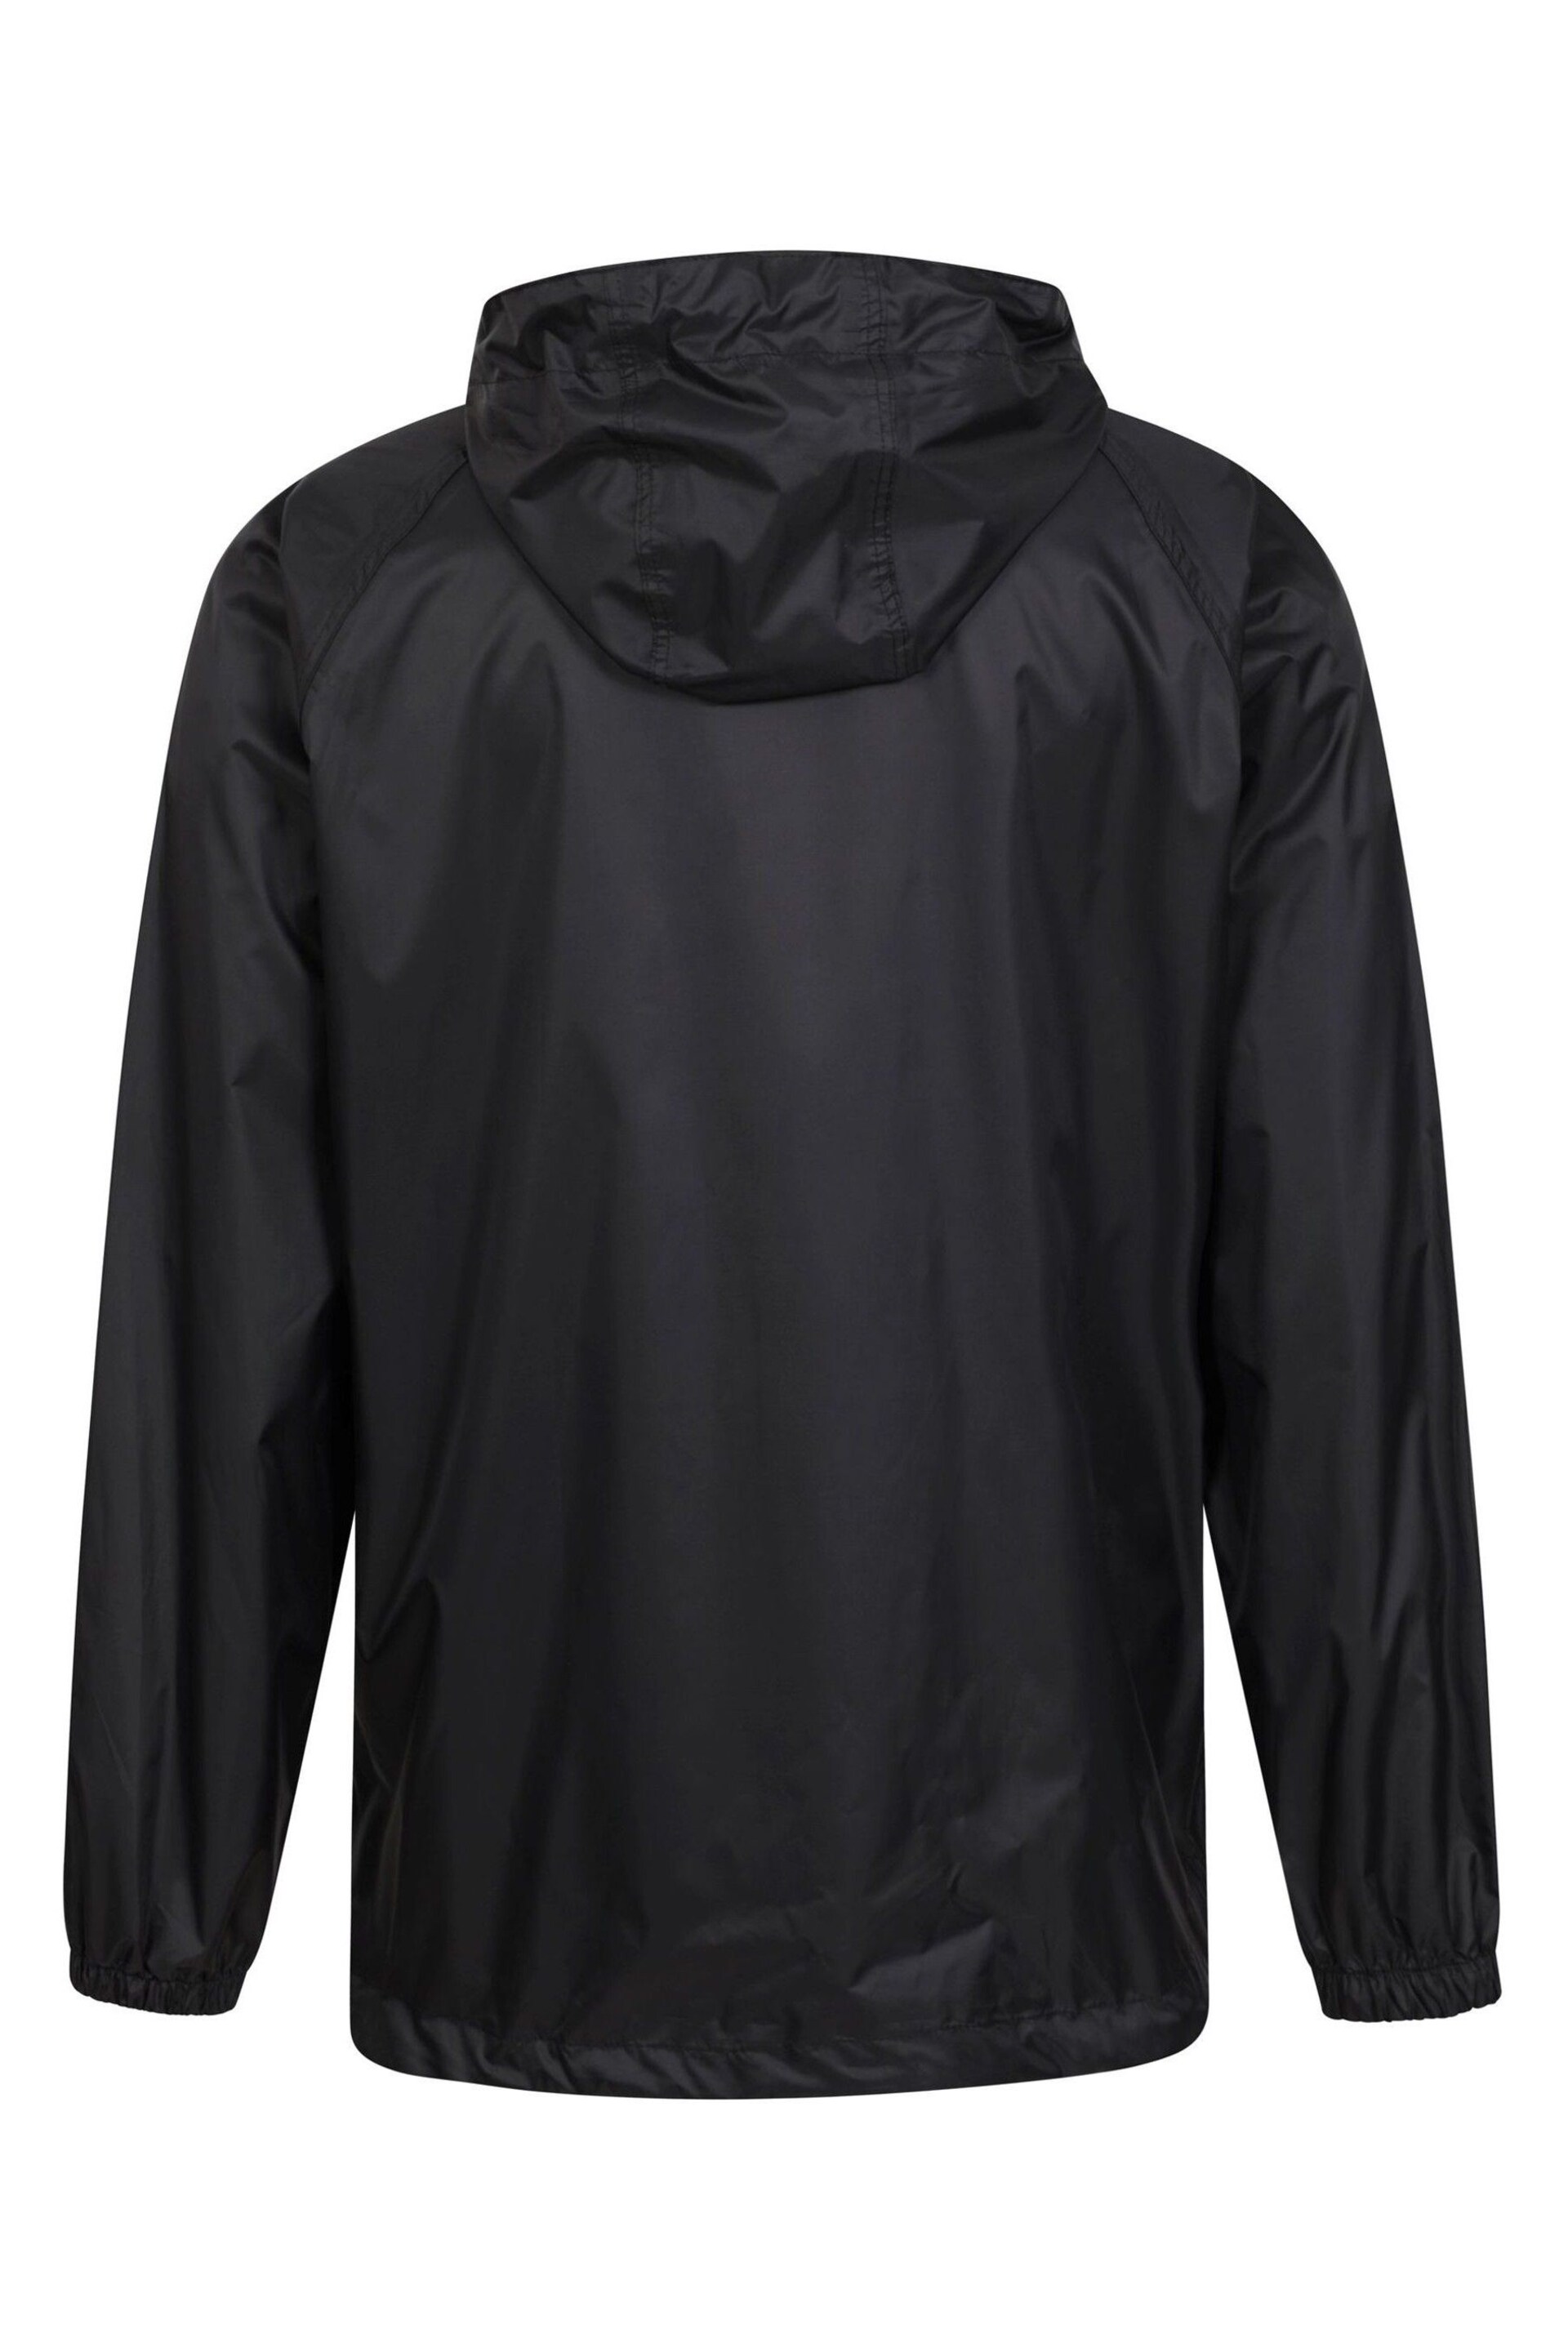 Mountain Warehouse Black Mens Pakka Waterproof Jacket - Image 3 of 5